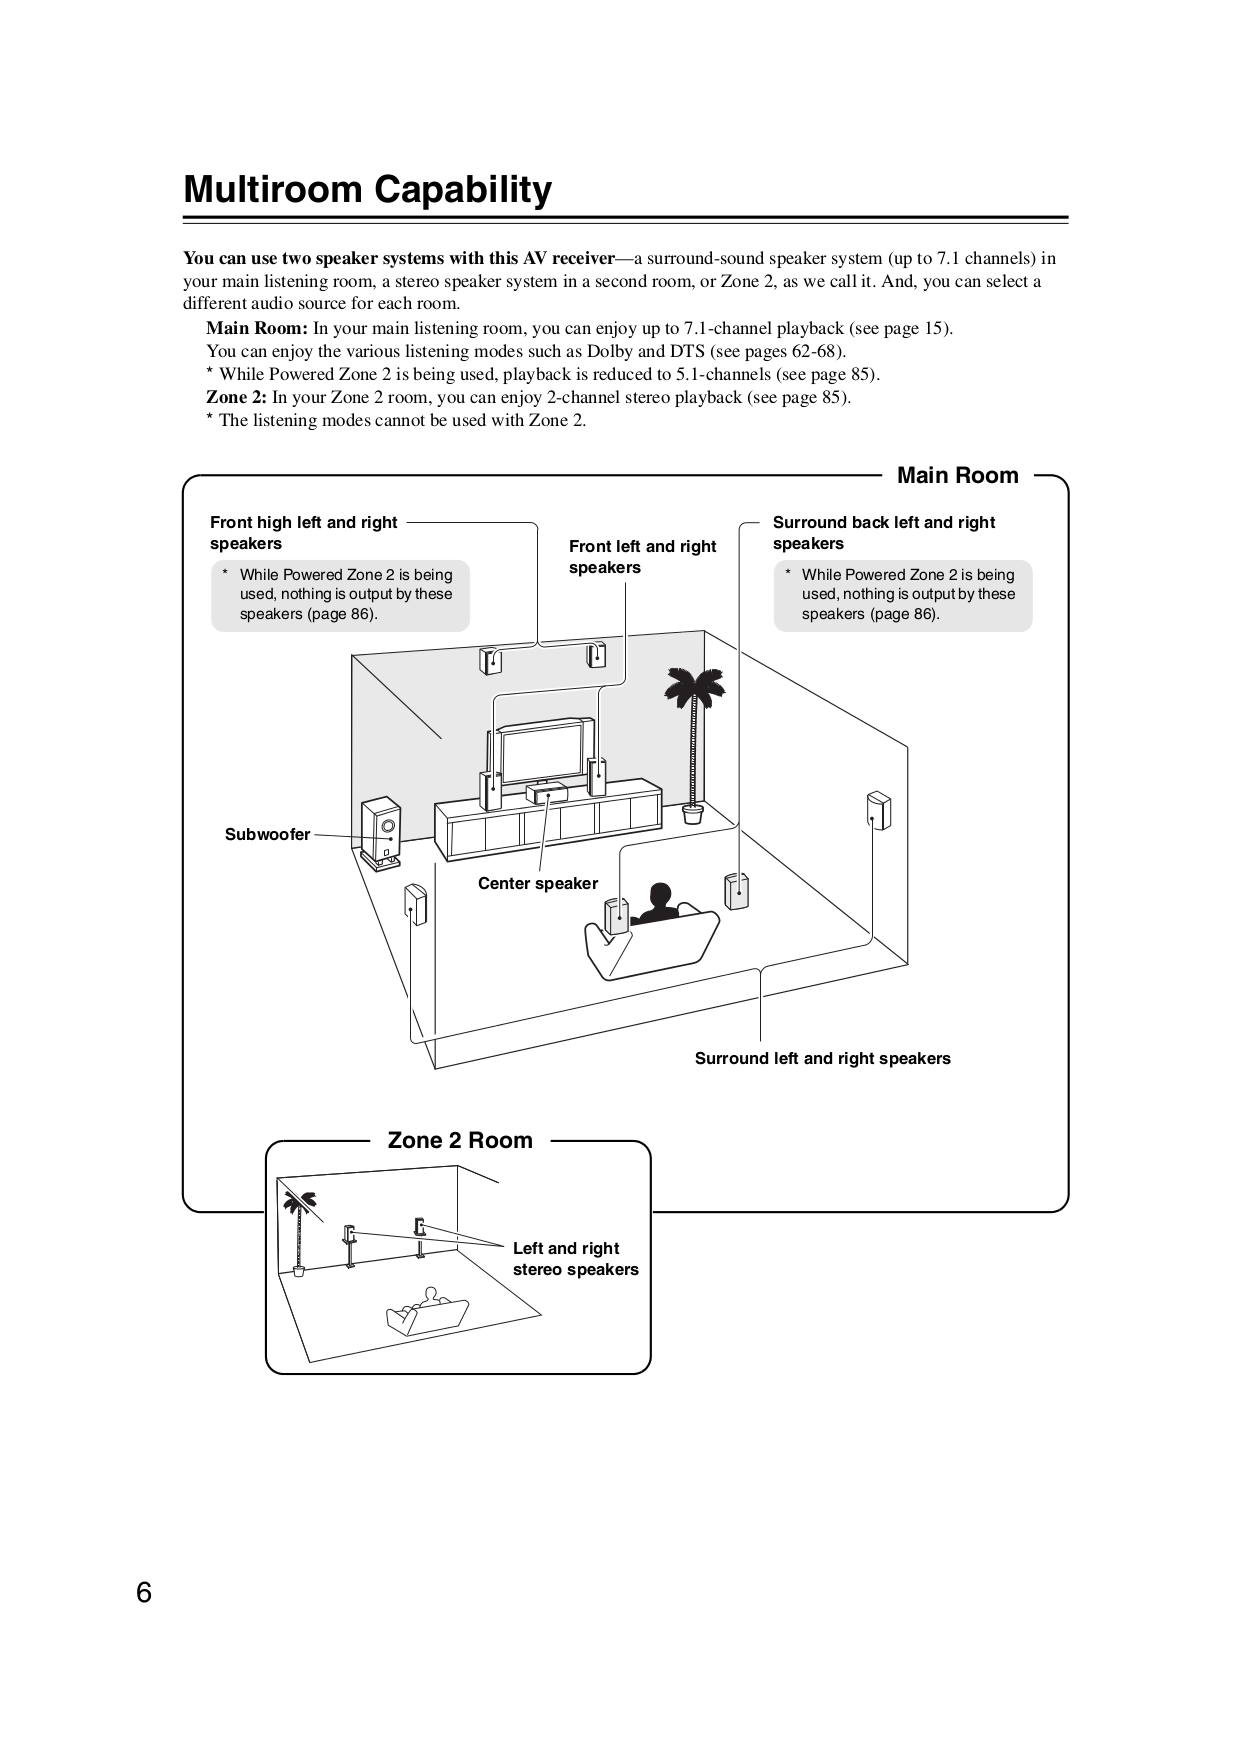 PDF manual for Onkyo Receiver TX-SR607